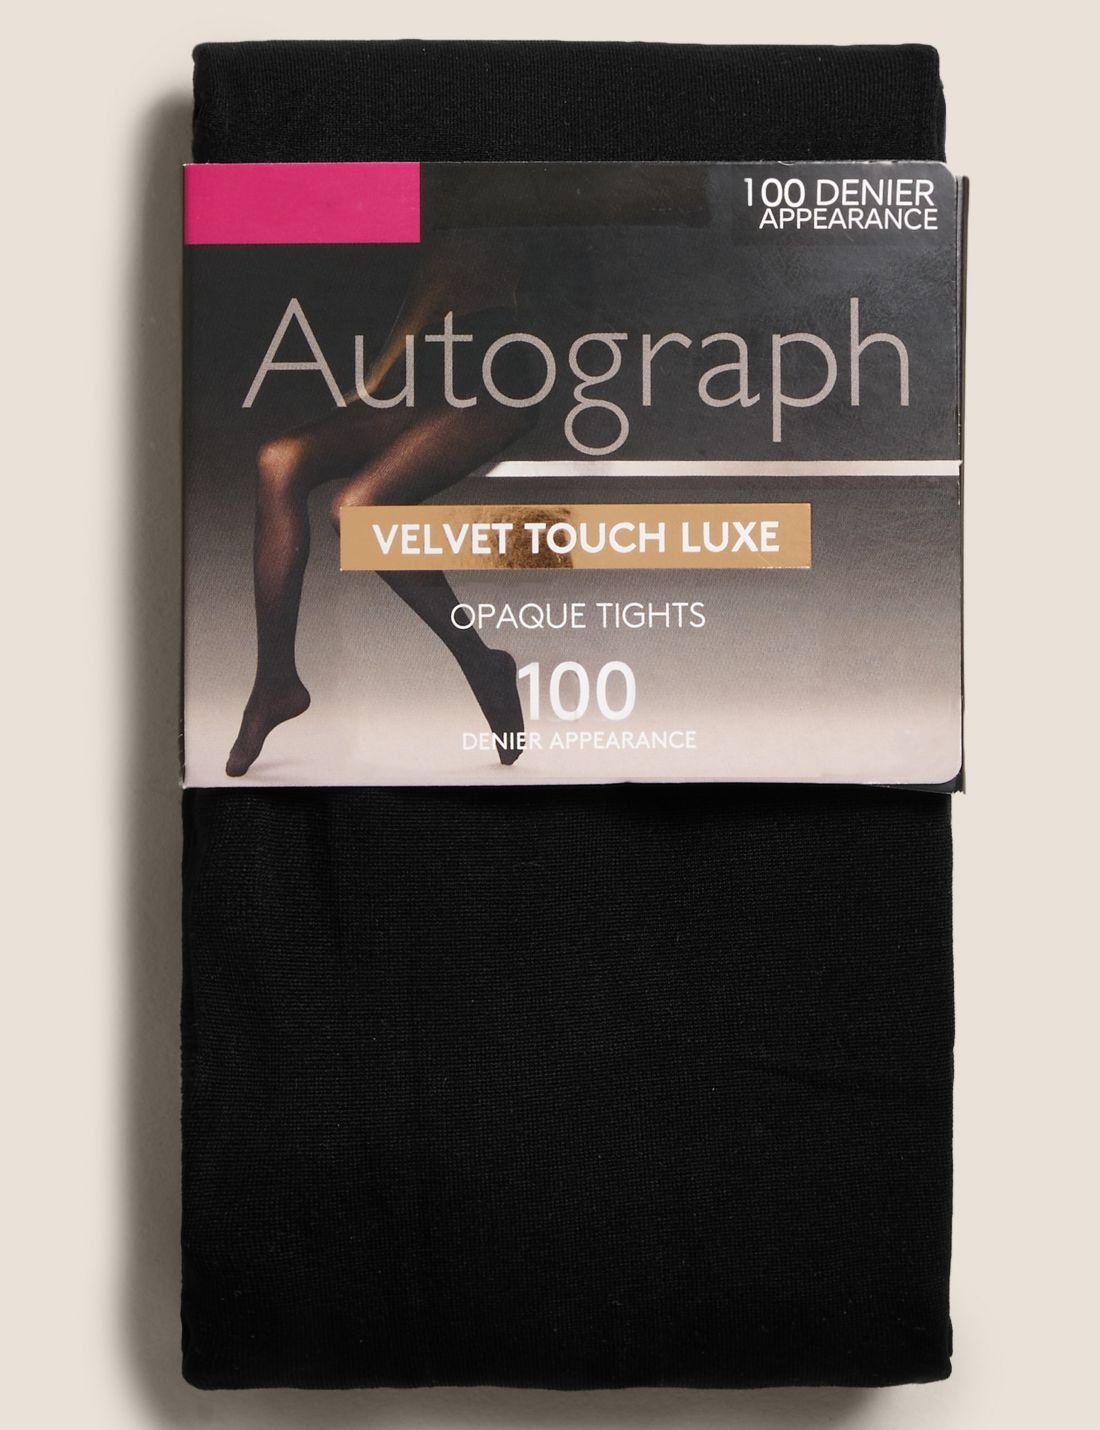 100 Denye Velvet Touch Luxe Külotlu Çorap